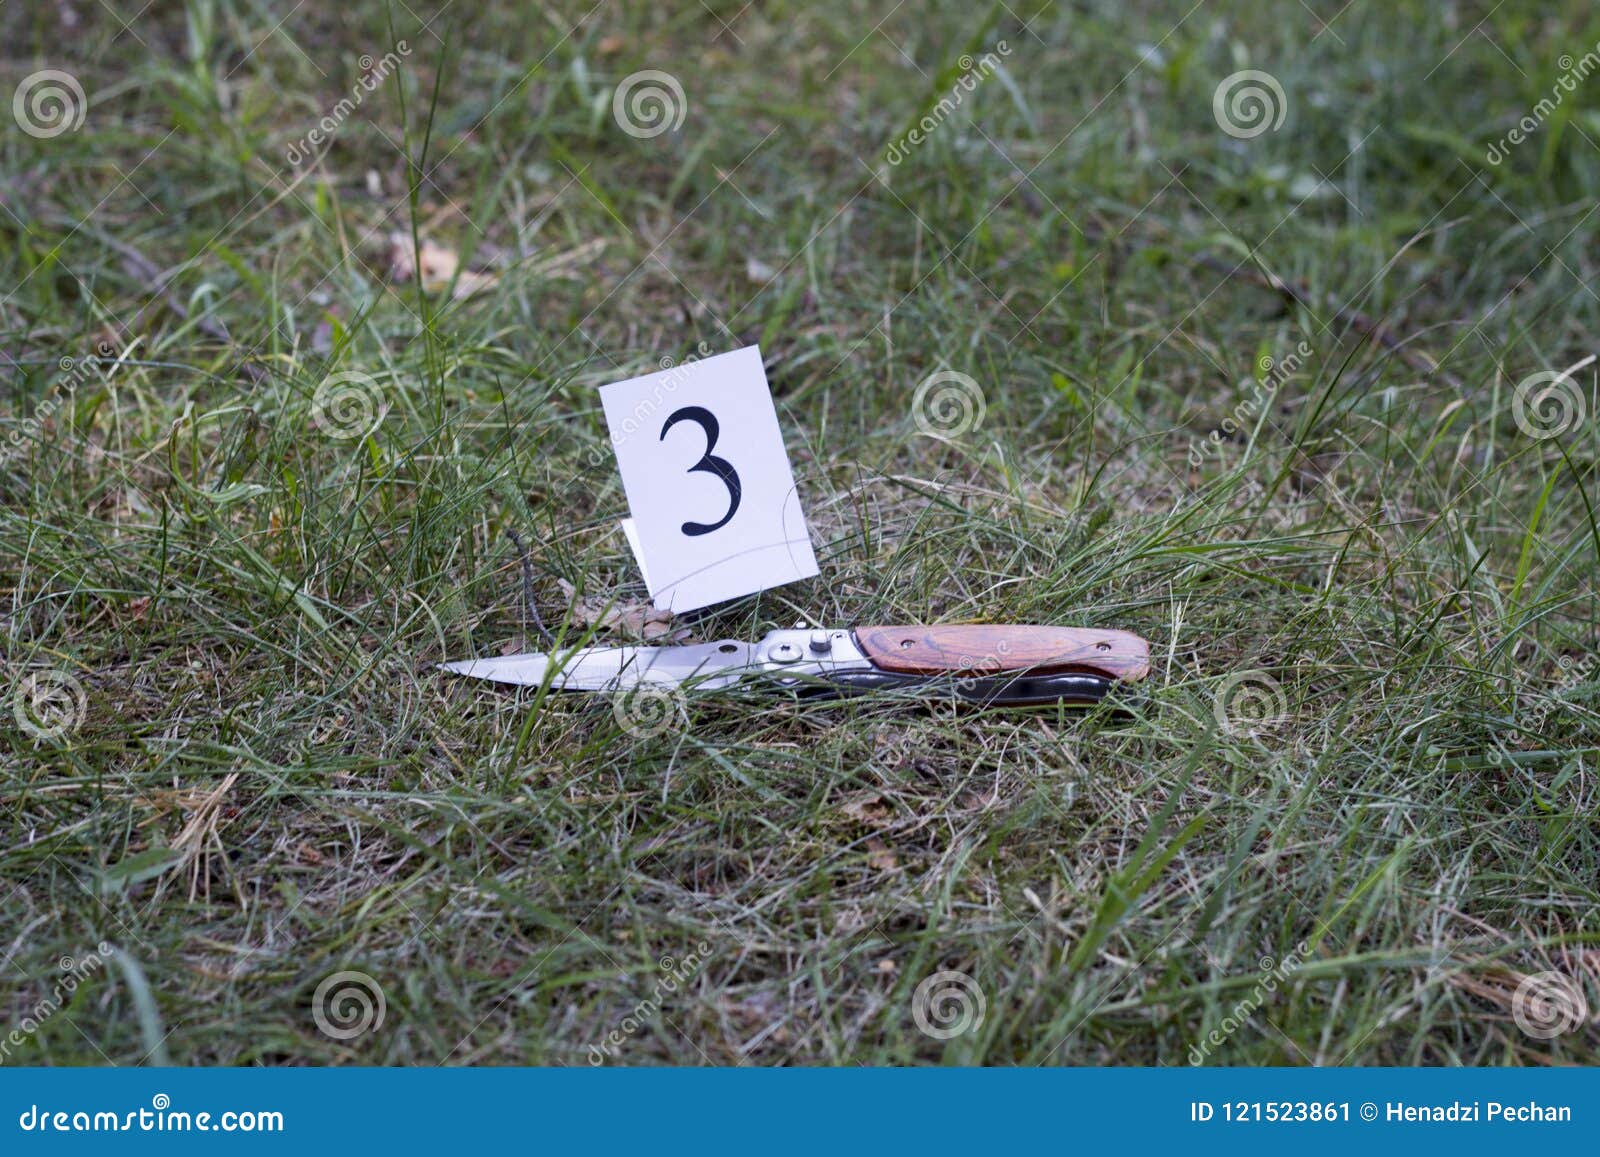 knife on the grass, investigation, murder